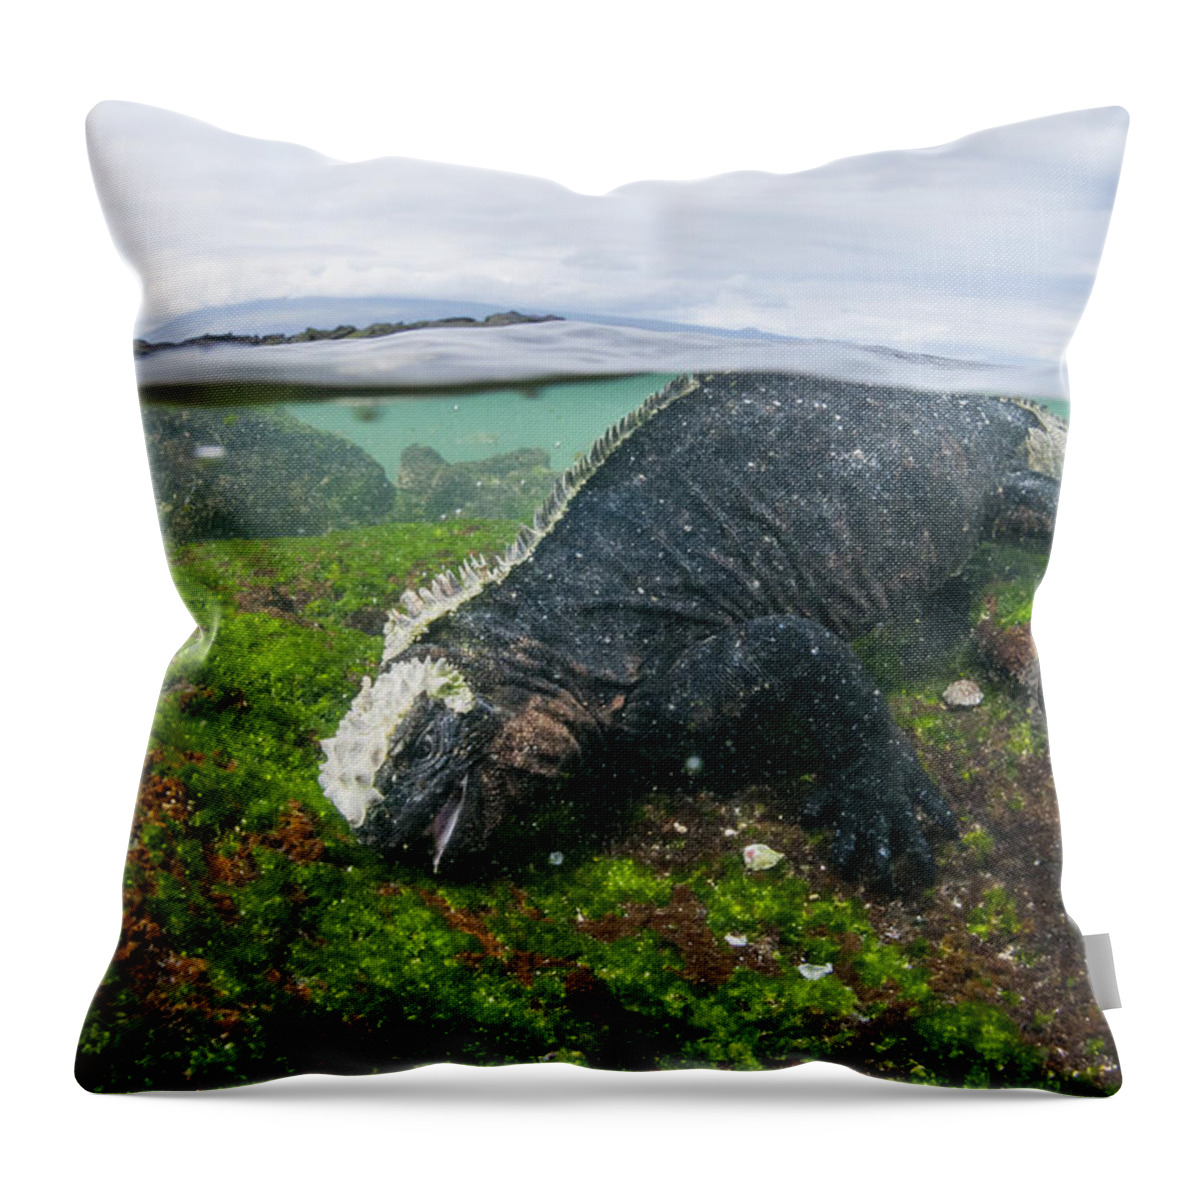 536806 Throw Pillow featuring the photograph Marine Iguana Eating Algae Galapagos by Tui De Roy